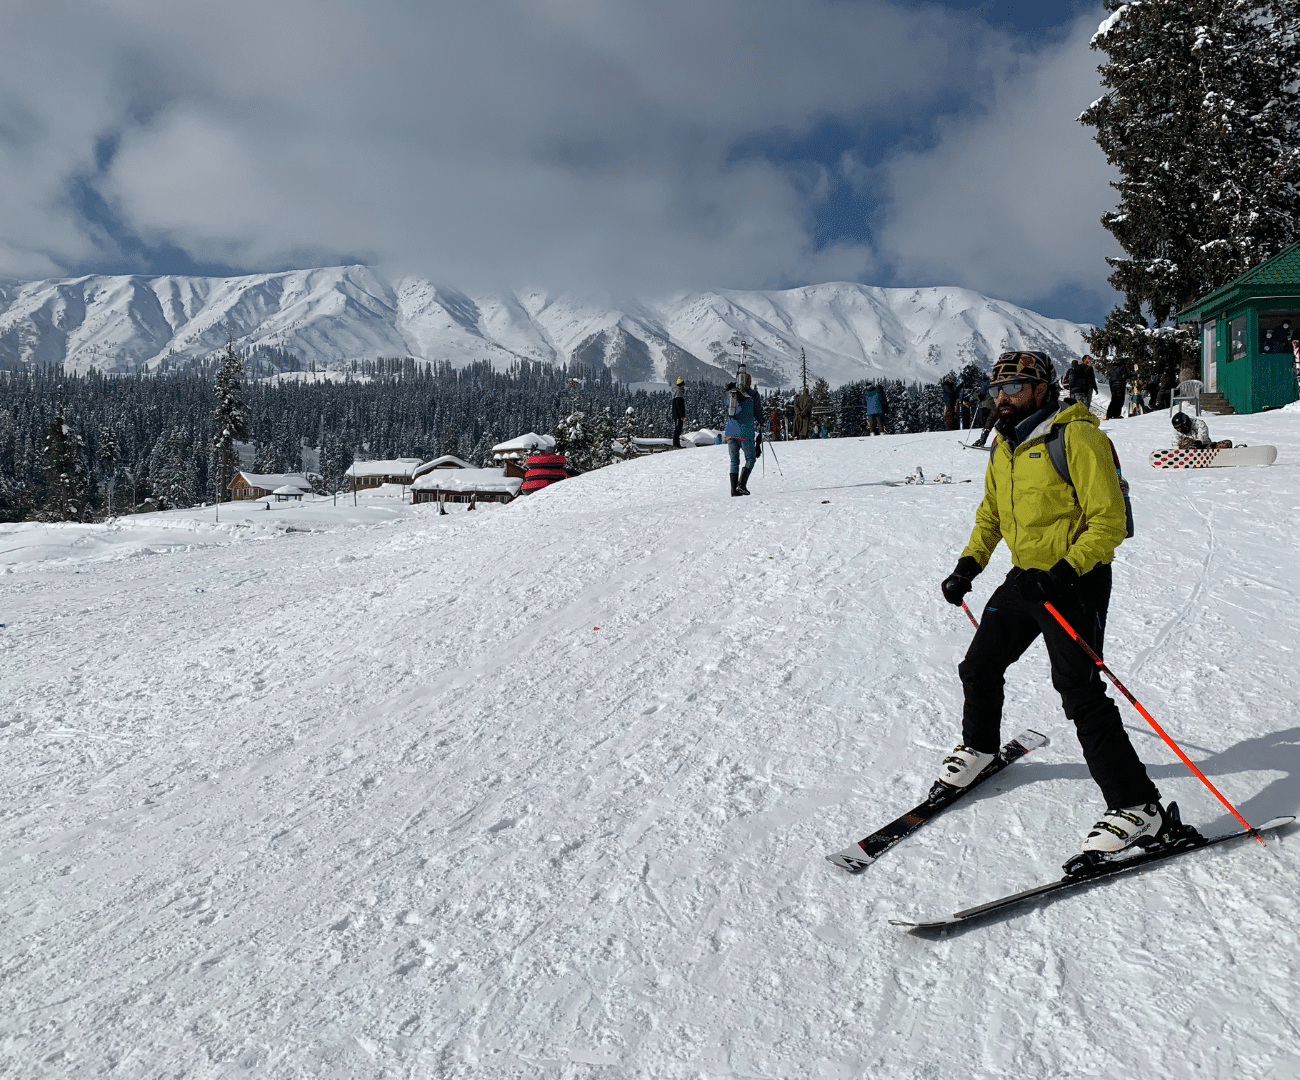 Snowboarding & skiing in kashmir trip